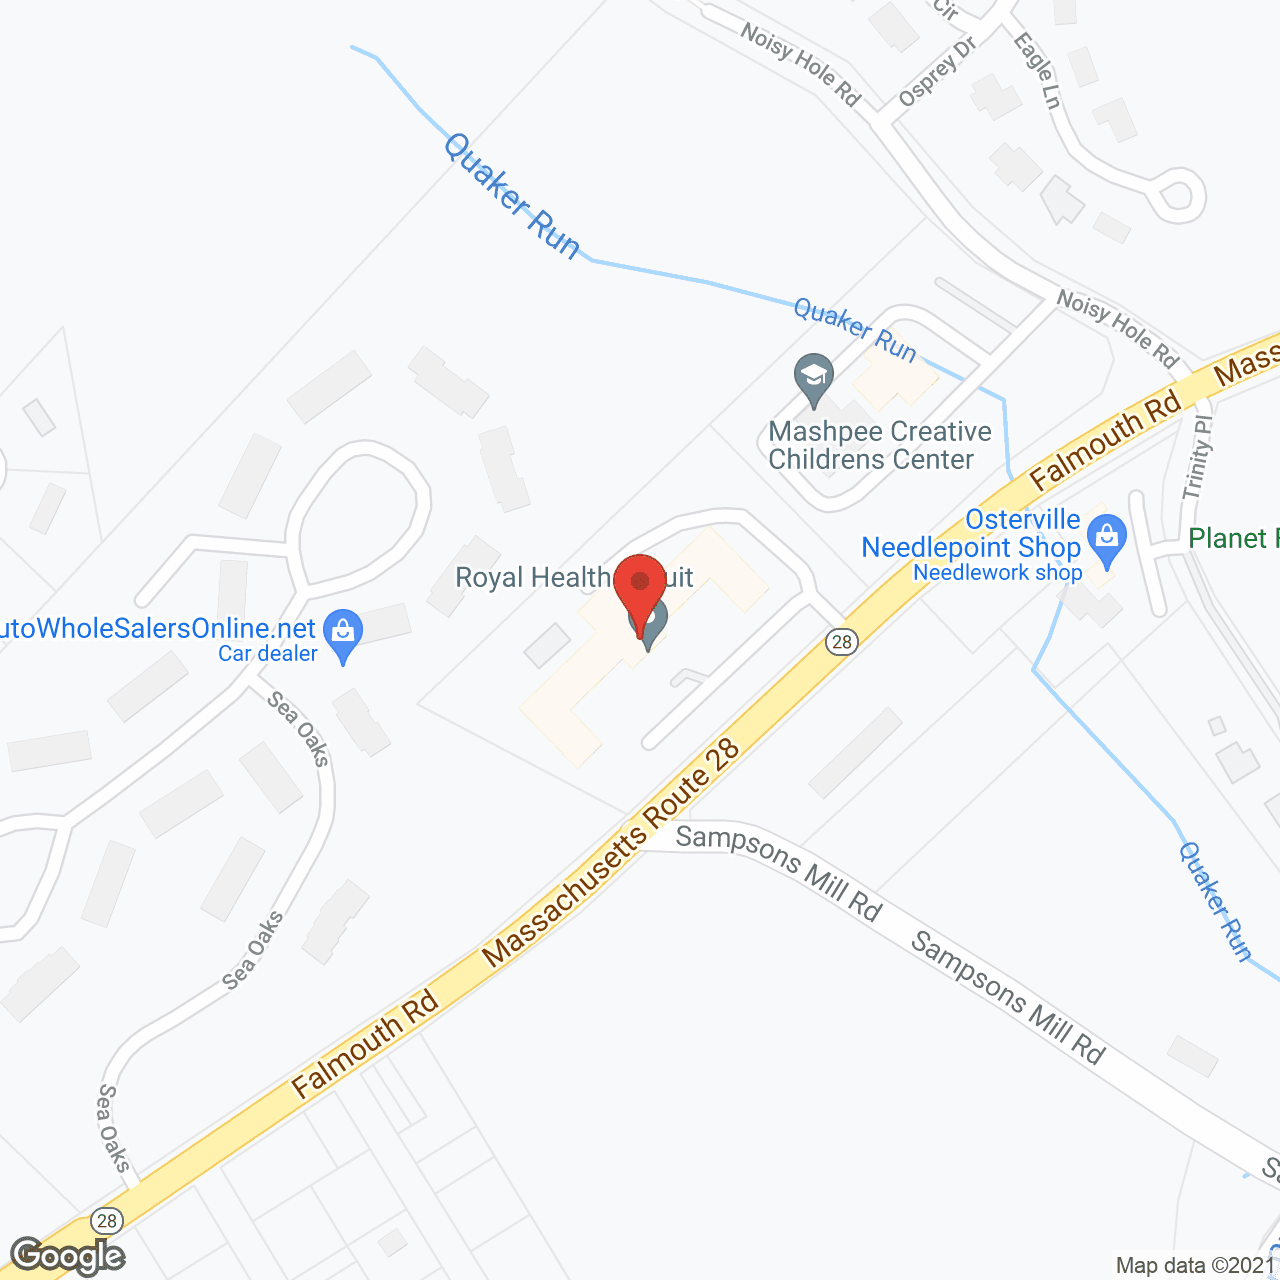 Mashpee Care and Rehabilitation Center in google map